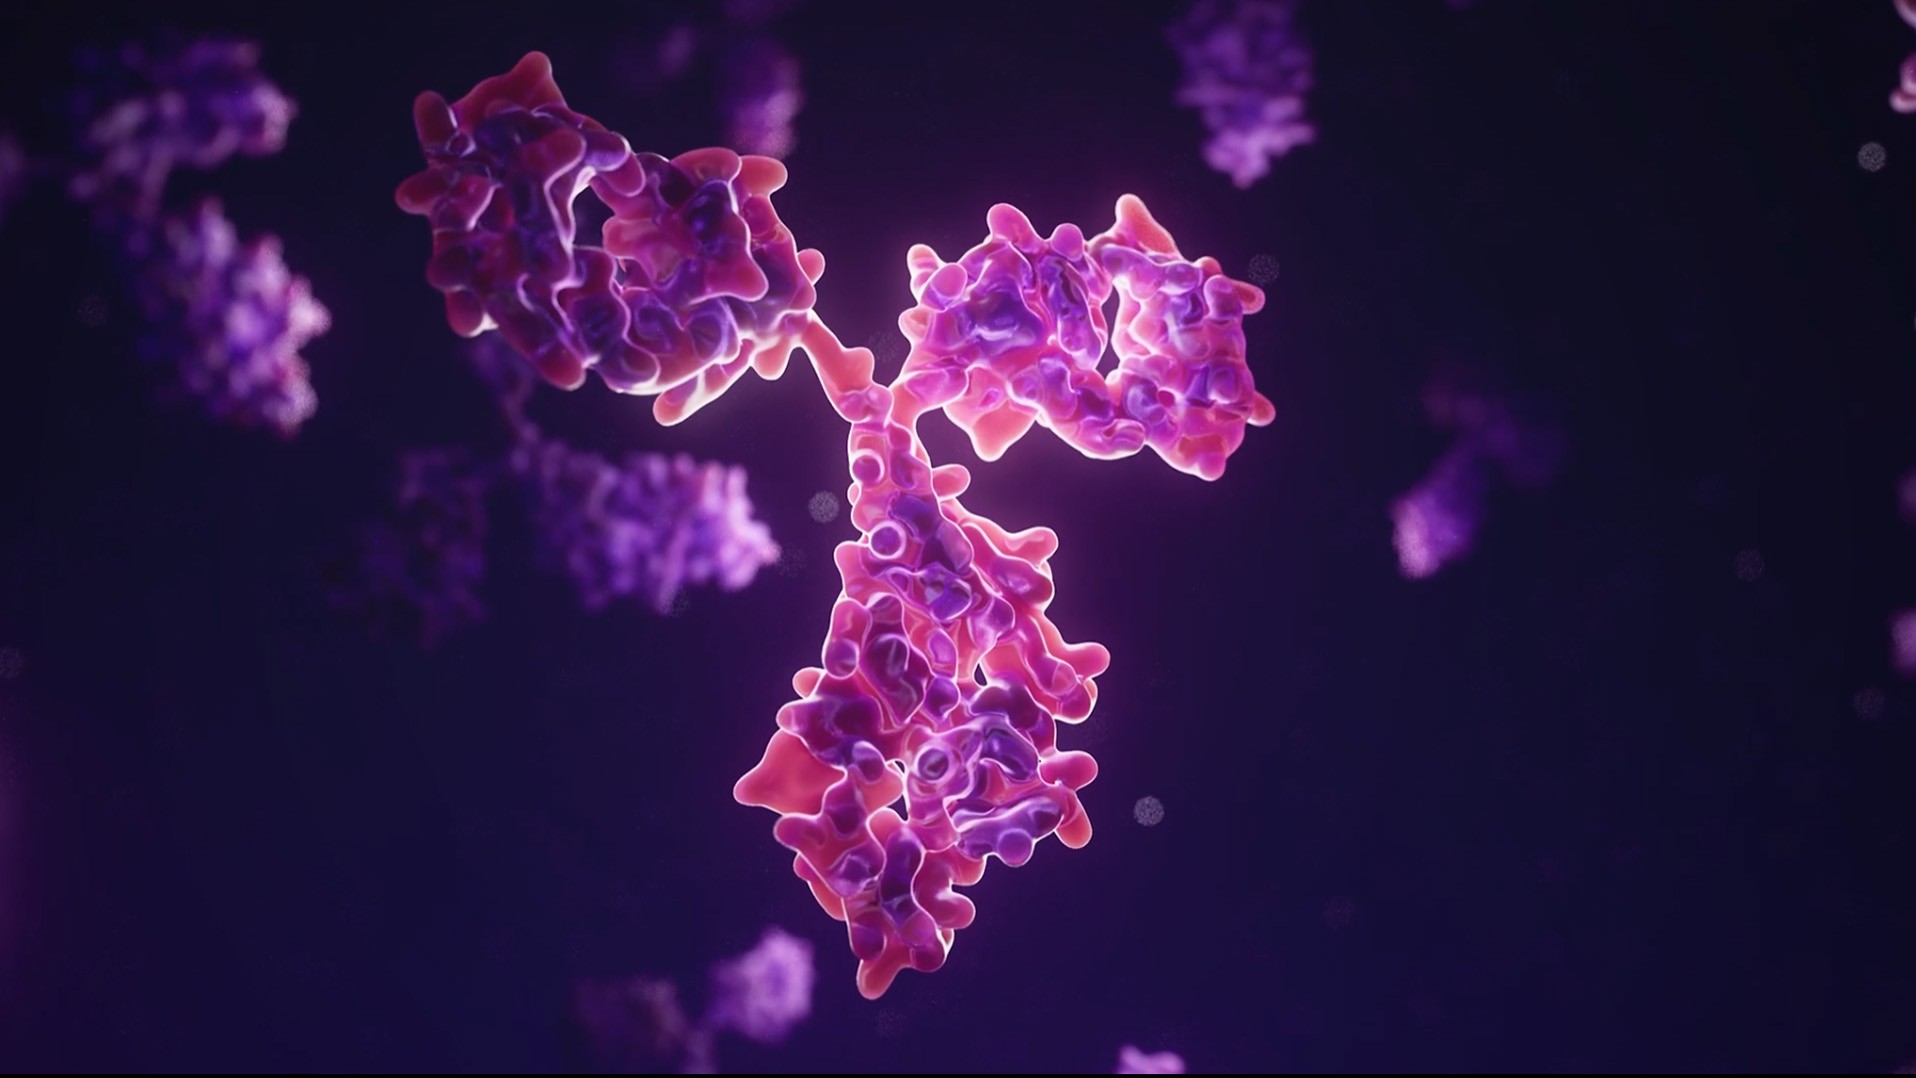 Illuminous purple antibody for Hecklab as 3D animation.jpg